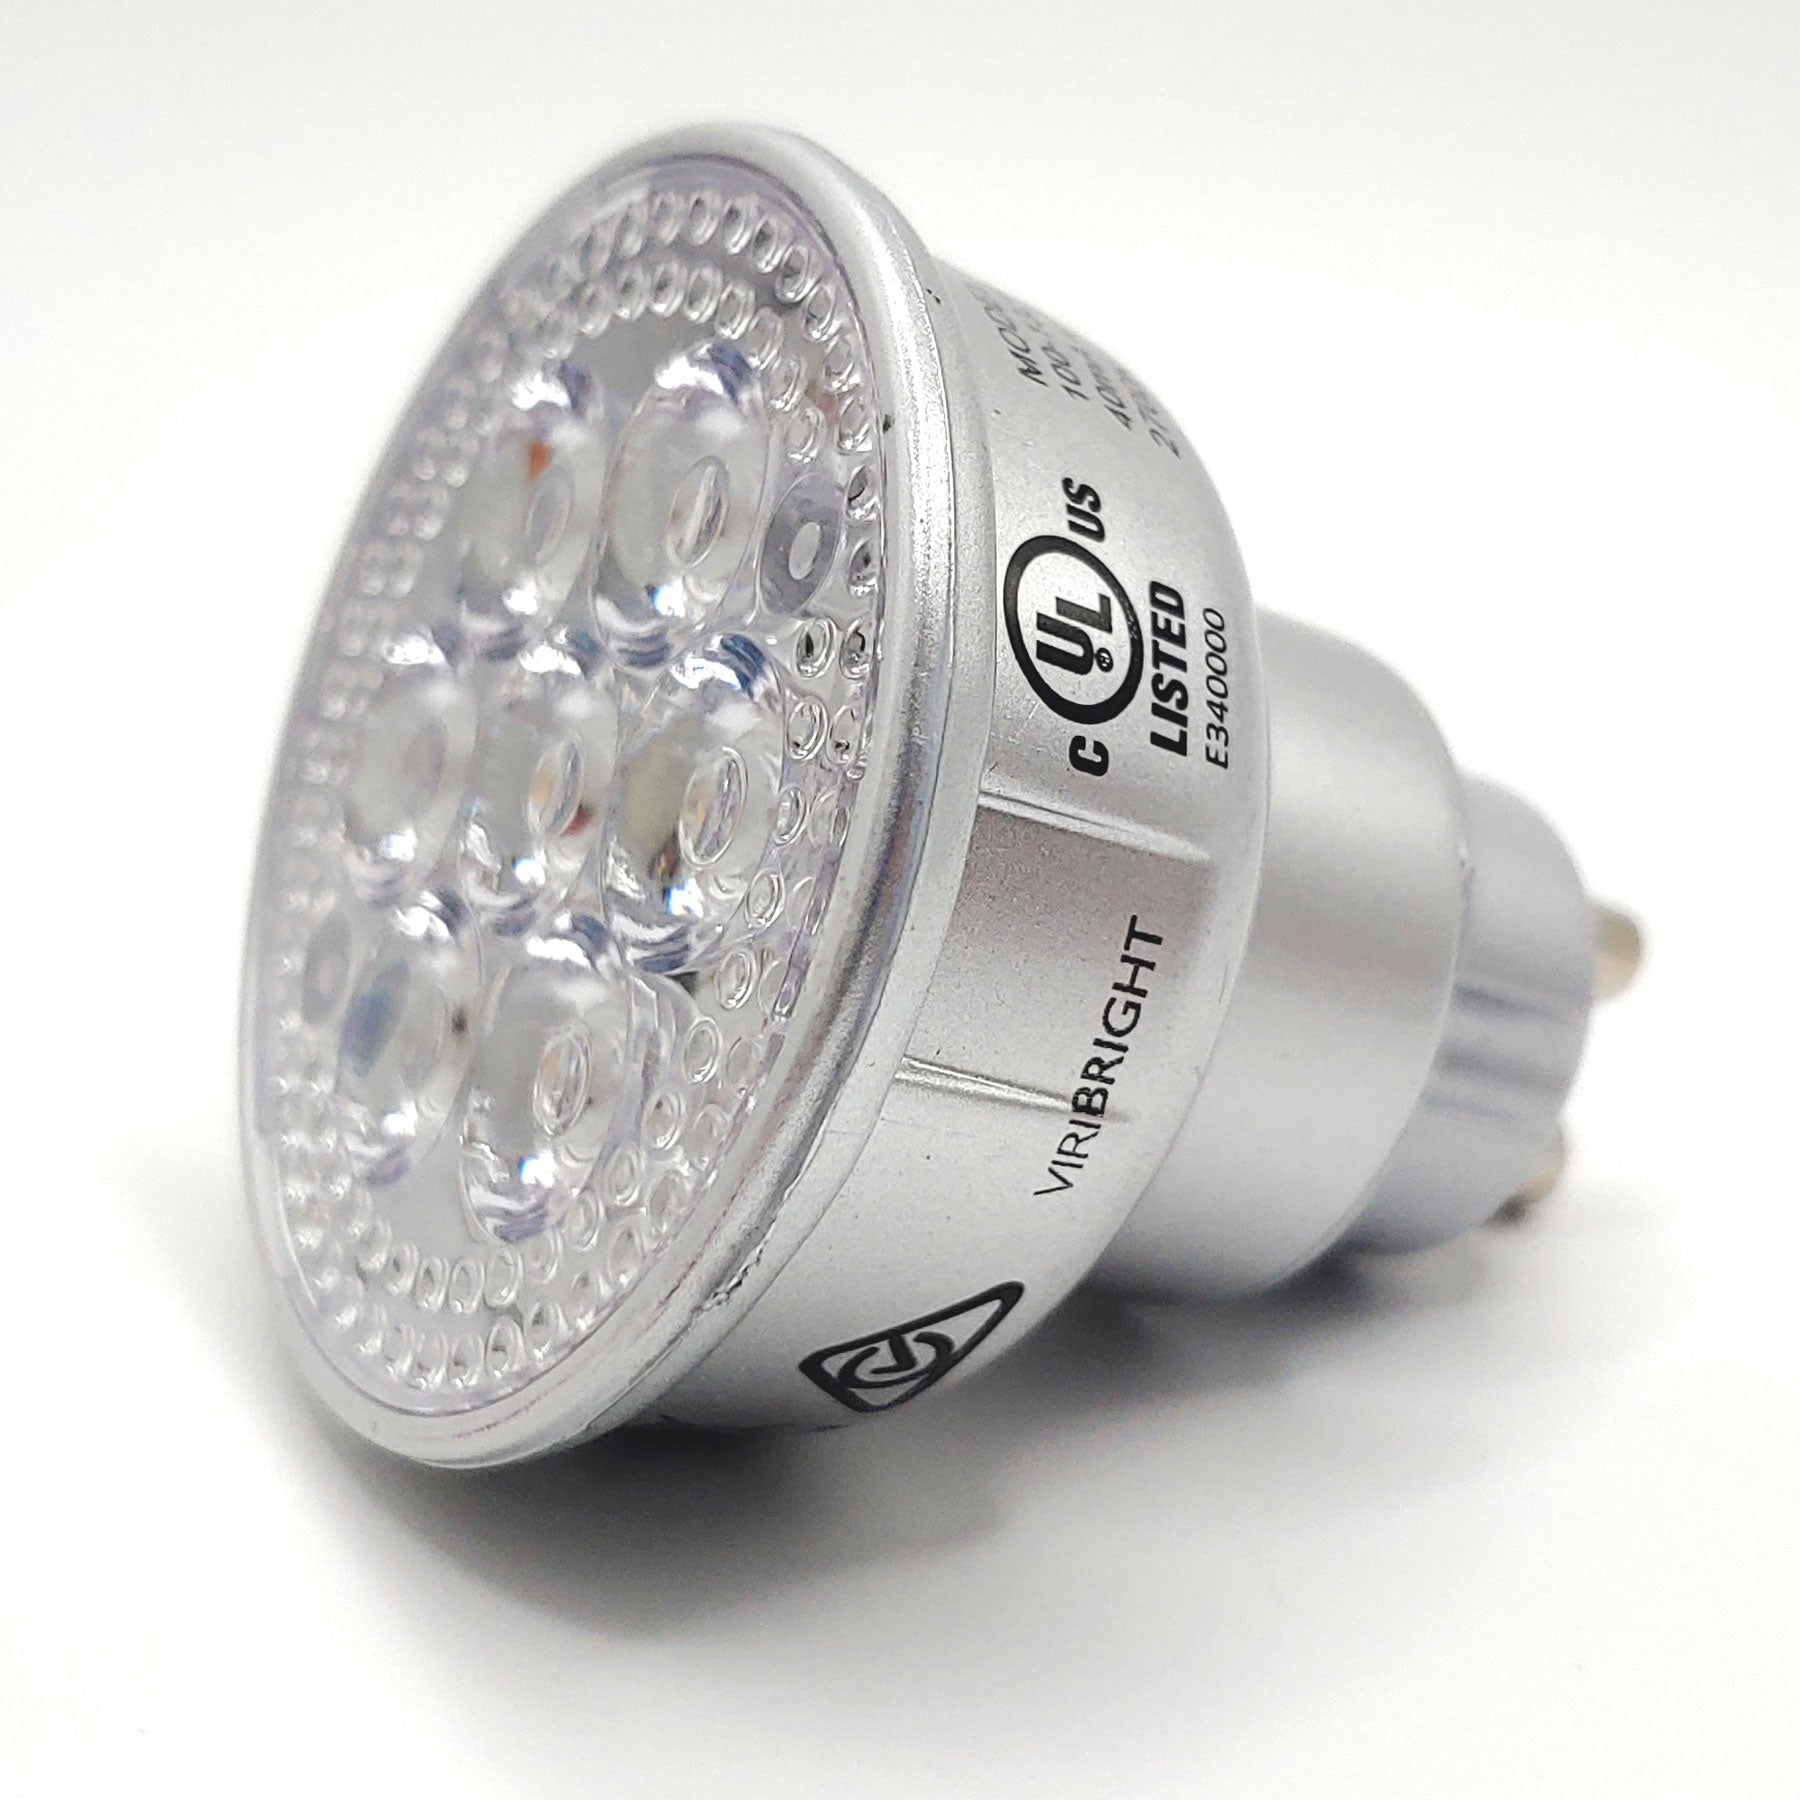  View details for 50-Watt Equivalent MR16 GU10 Dimmable LED Flood Light Bulb 50-Watt Equivalent MR16 GU10 Dimmable LED Flood Light Bulb